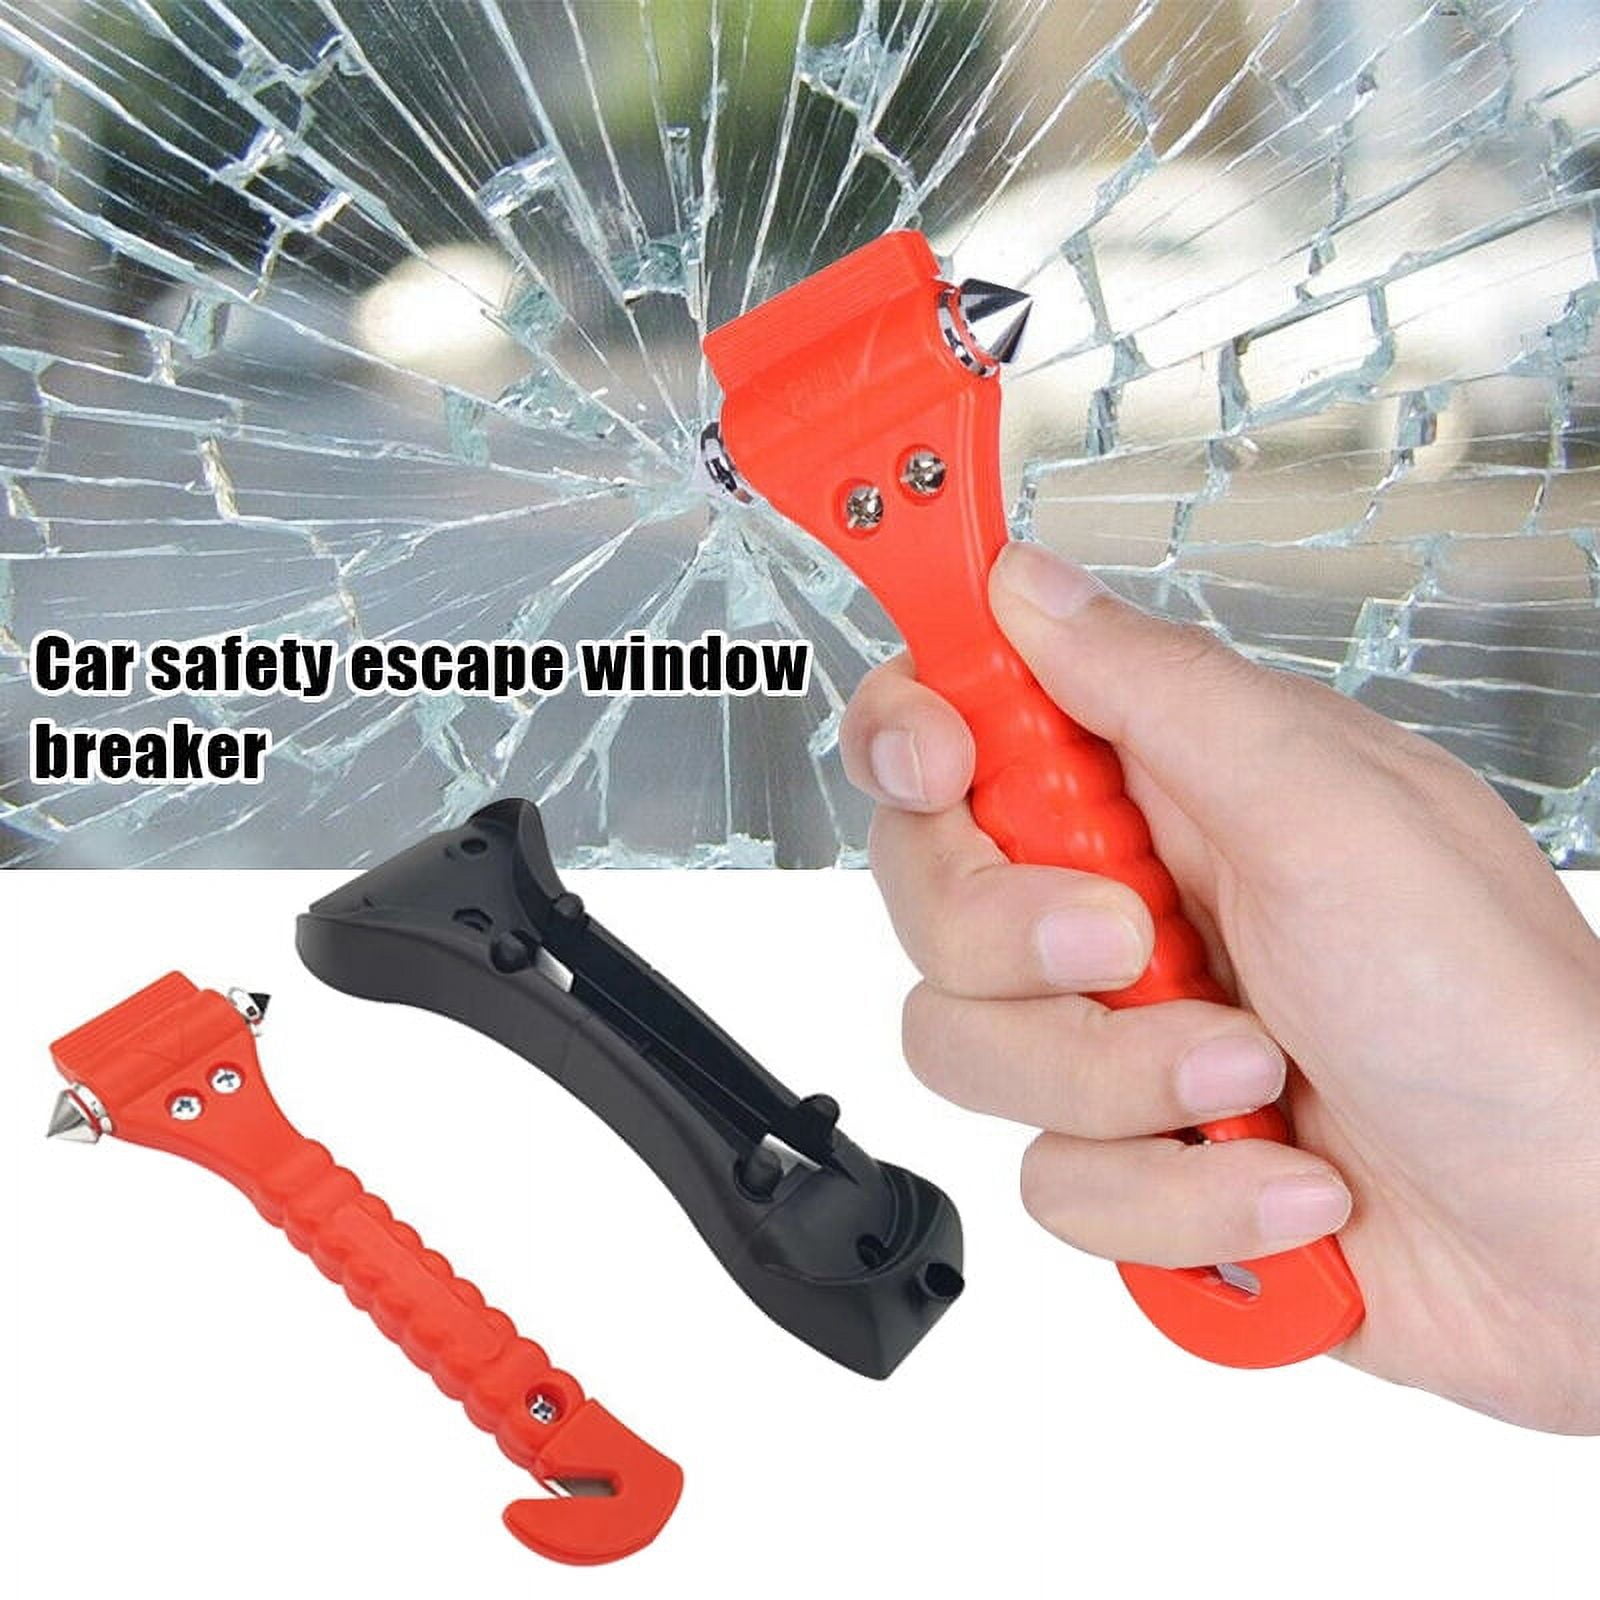 Hammerdex Car Safety Tool, Hammerdex Tool, Safehammer Glass Breaker,  Hammerdex - Hammerdex Glass Breaker, Safe Hammer Car Window Breaker, Seat  Belt